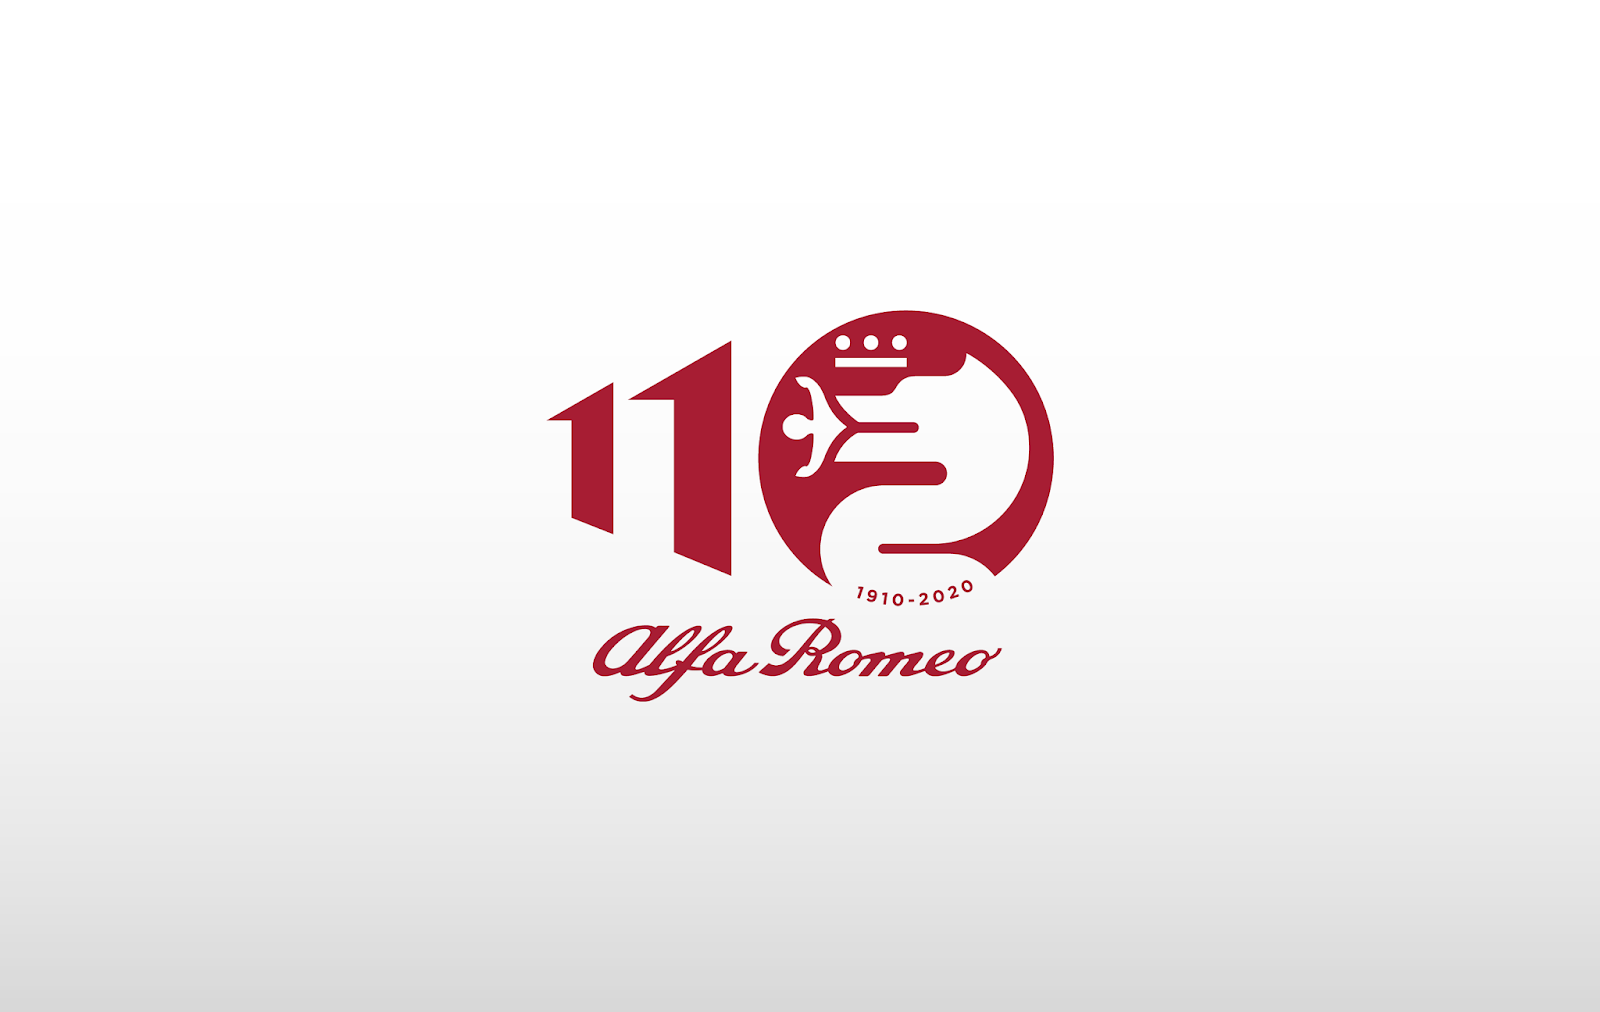 ALFA ROMEO 110 IMMAGINE ARTICOLO Η Alfa Romeo γιορτάζει τα 110 της χρόνια με νέο σήμα!